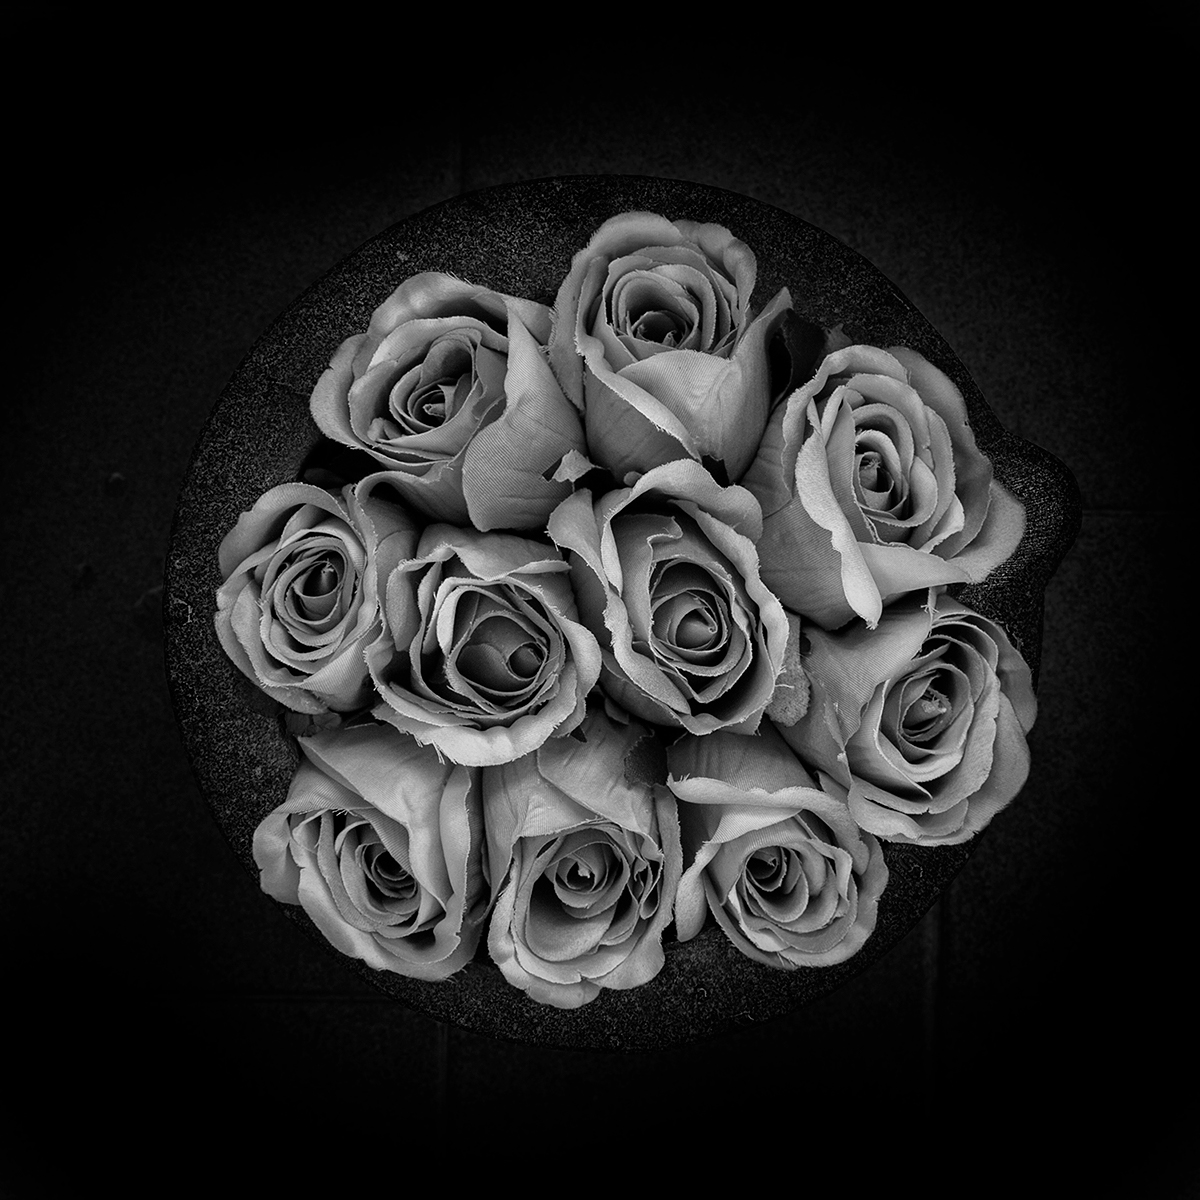 flower aphorism Nature fine design light black White square rose Ps25Under25